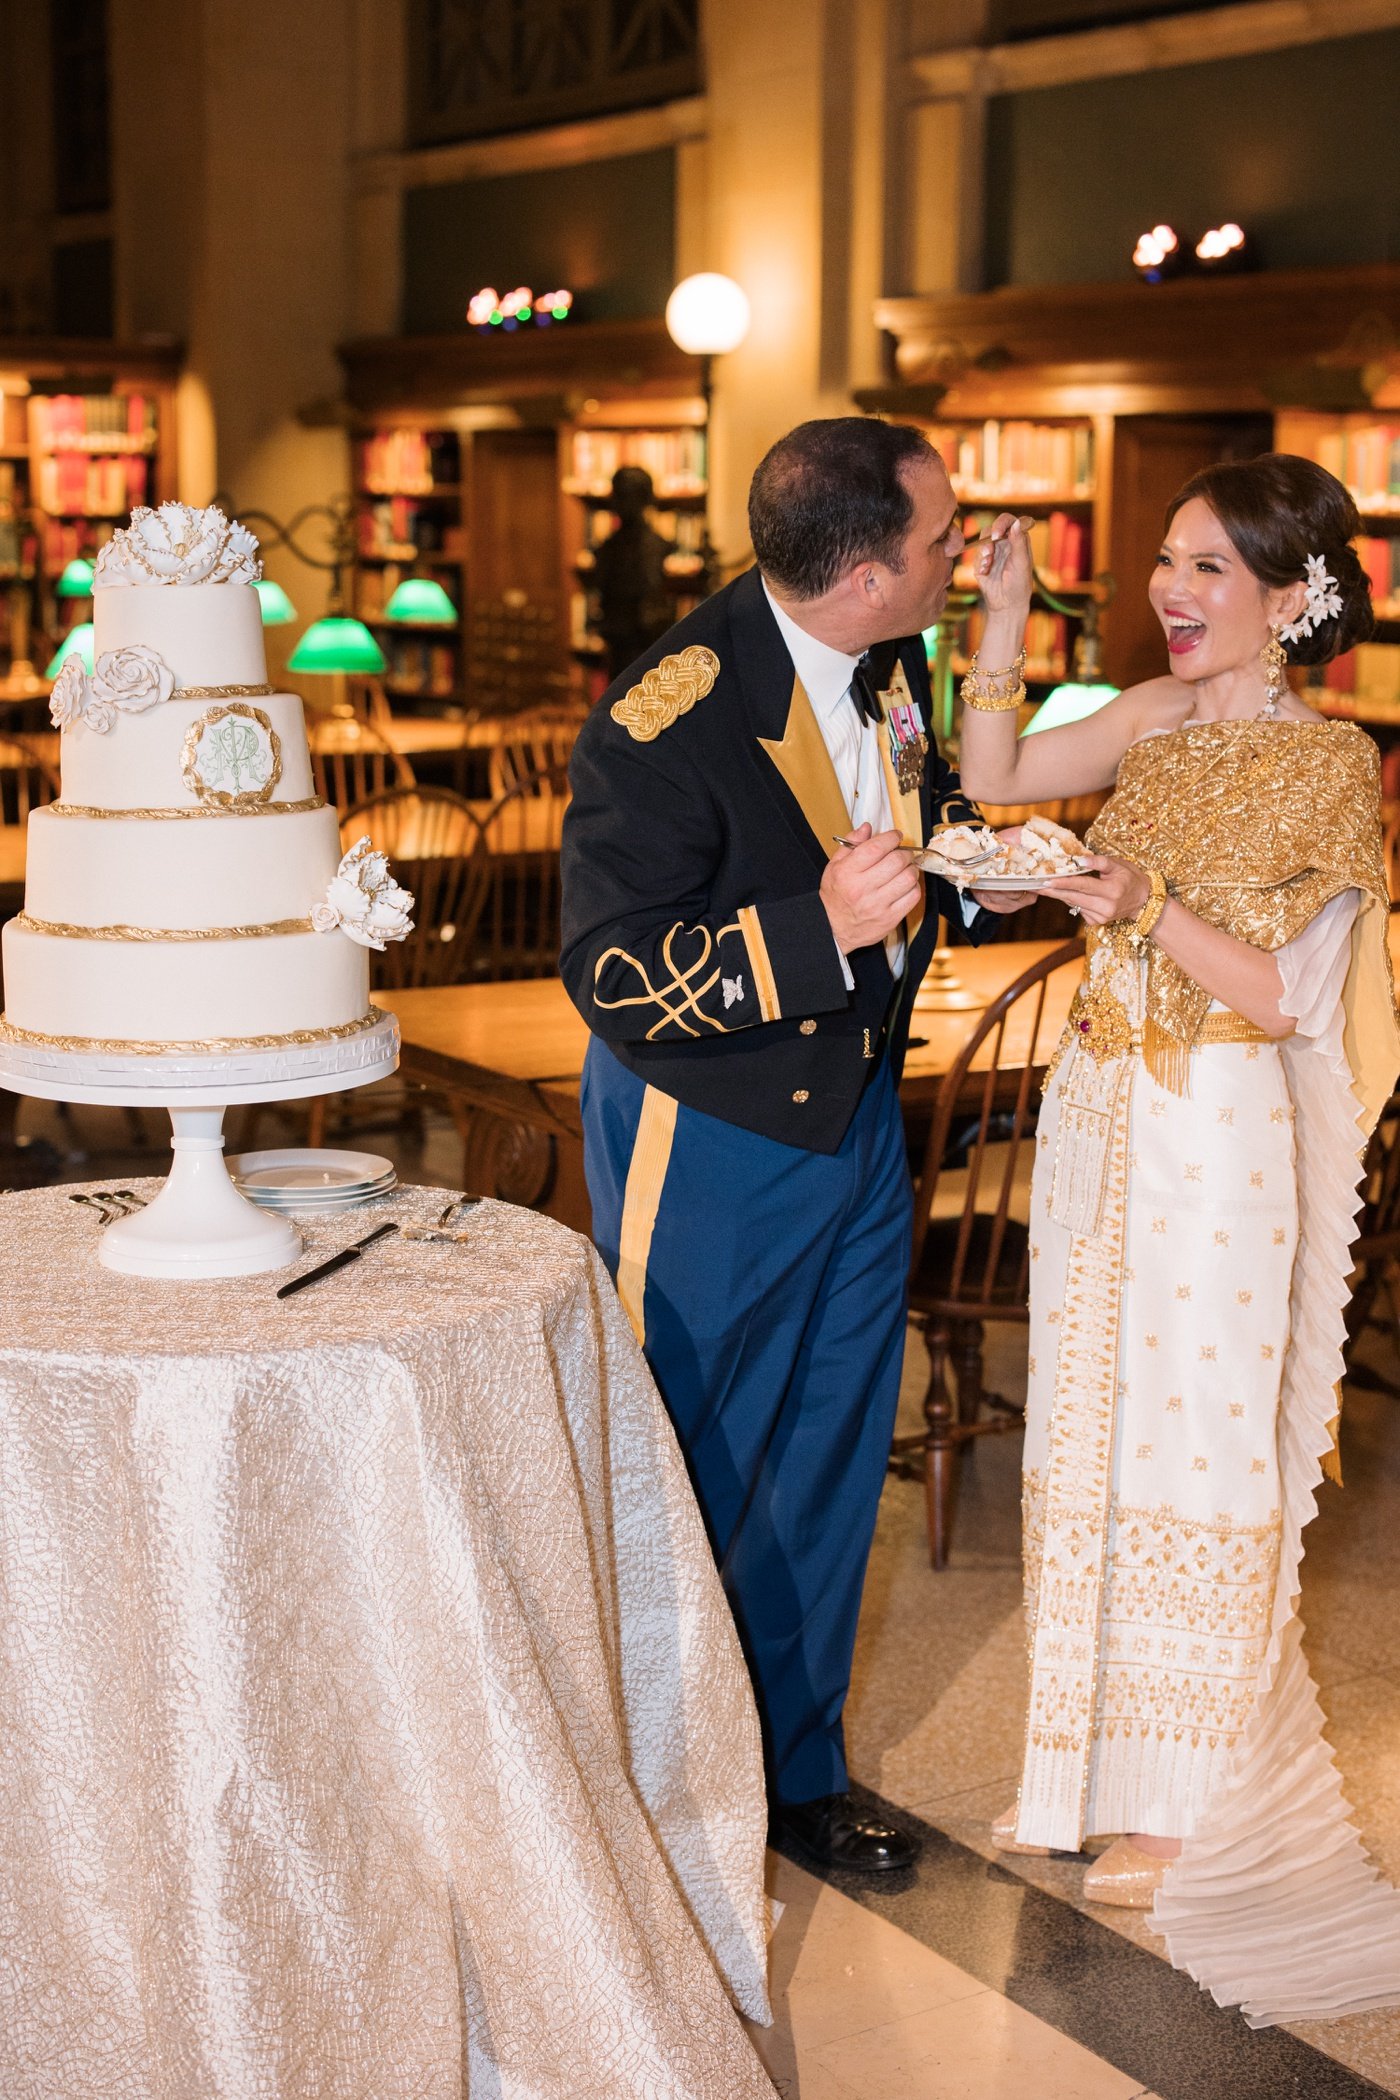 Wedding reception at Boston Public Library